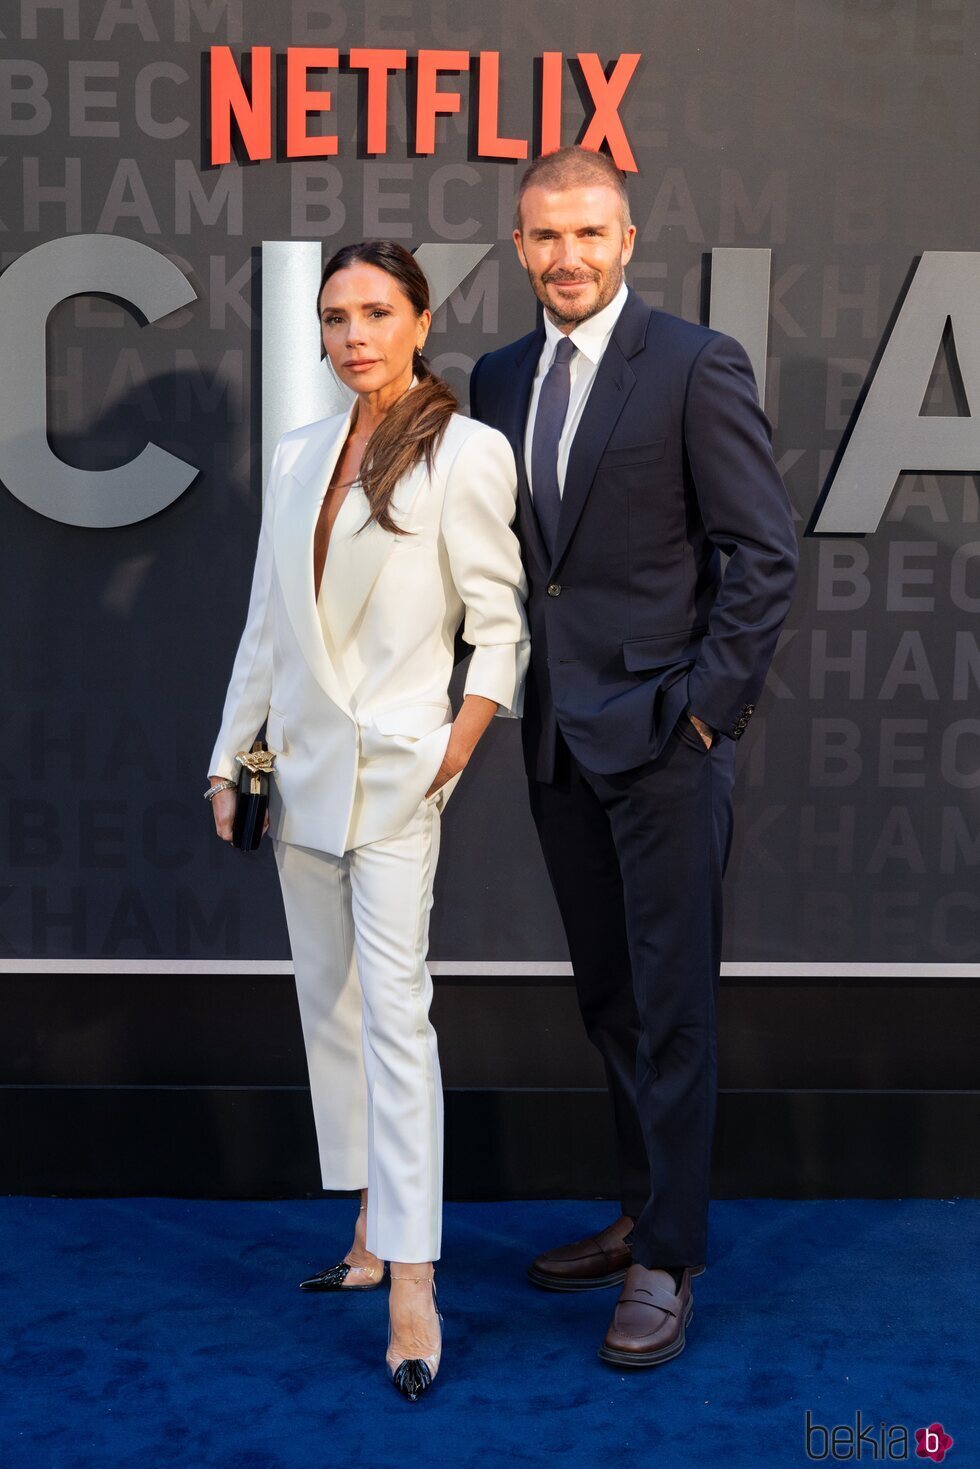 David Beckham y Victoria Beckham en la premiere de su docuserie 'Beckham'